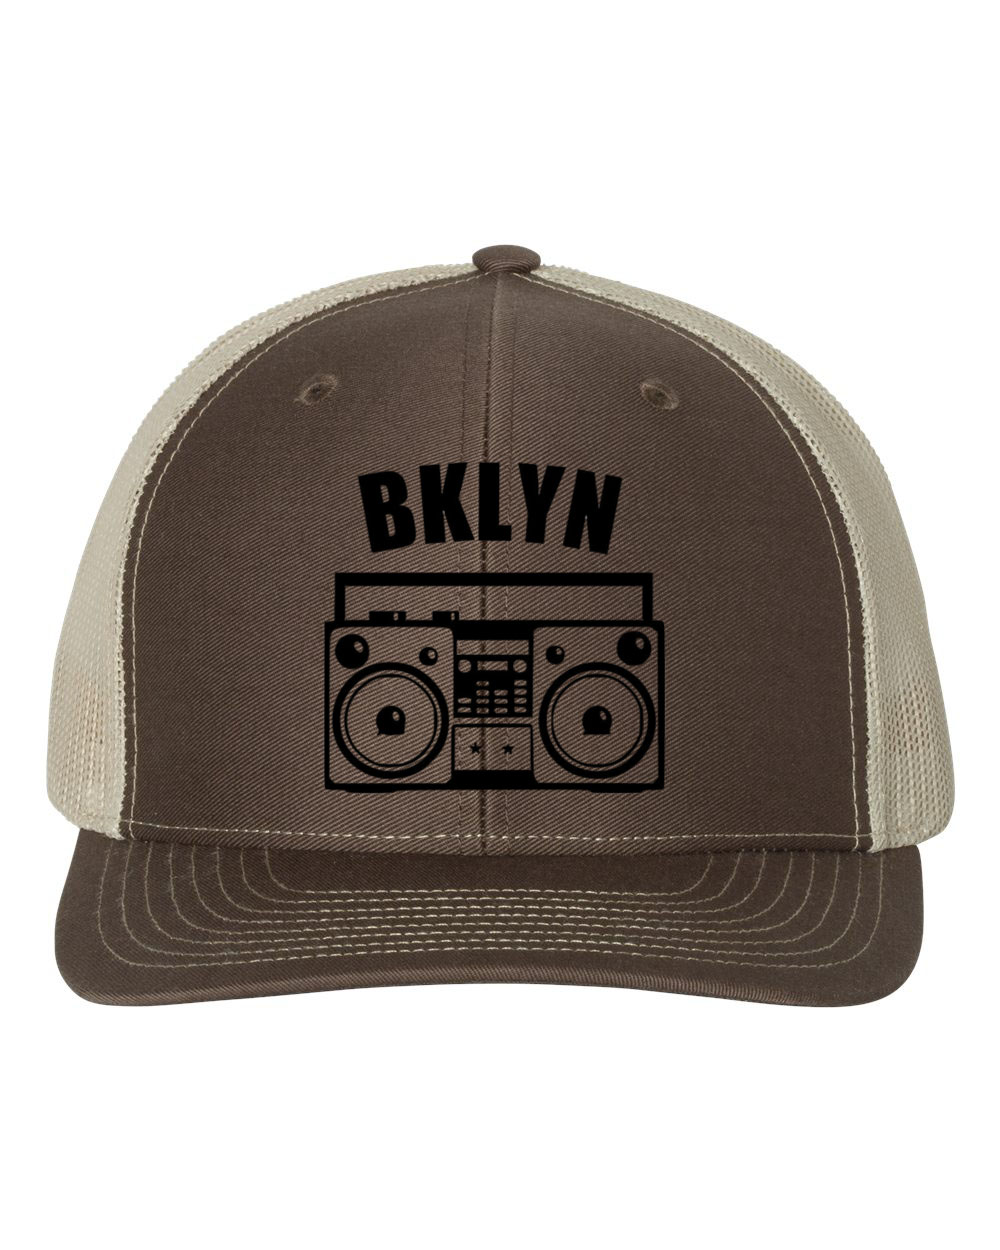 Brooklyn Hat, BKLYN, Boombox Hat, Retro Hat, Trucker Hat, Brooklyn Snapback, New York Hat, Adjustable Cap, Bklyn Hat, 90's Hat, Black Text, Brown/Khaki - image 1 of 1